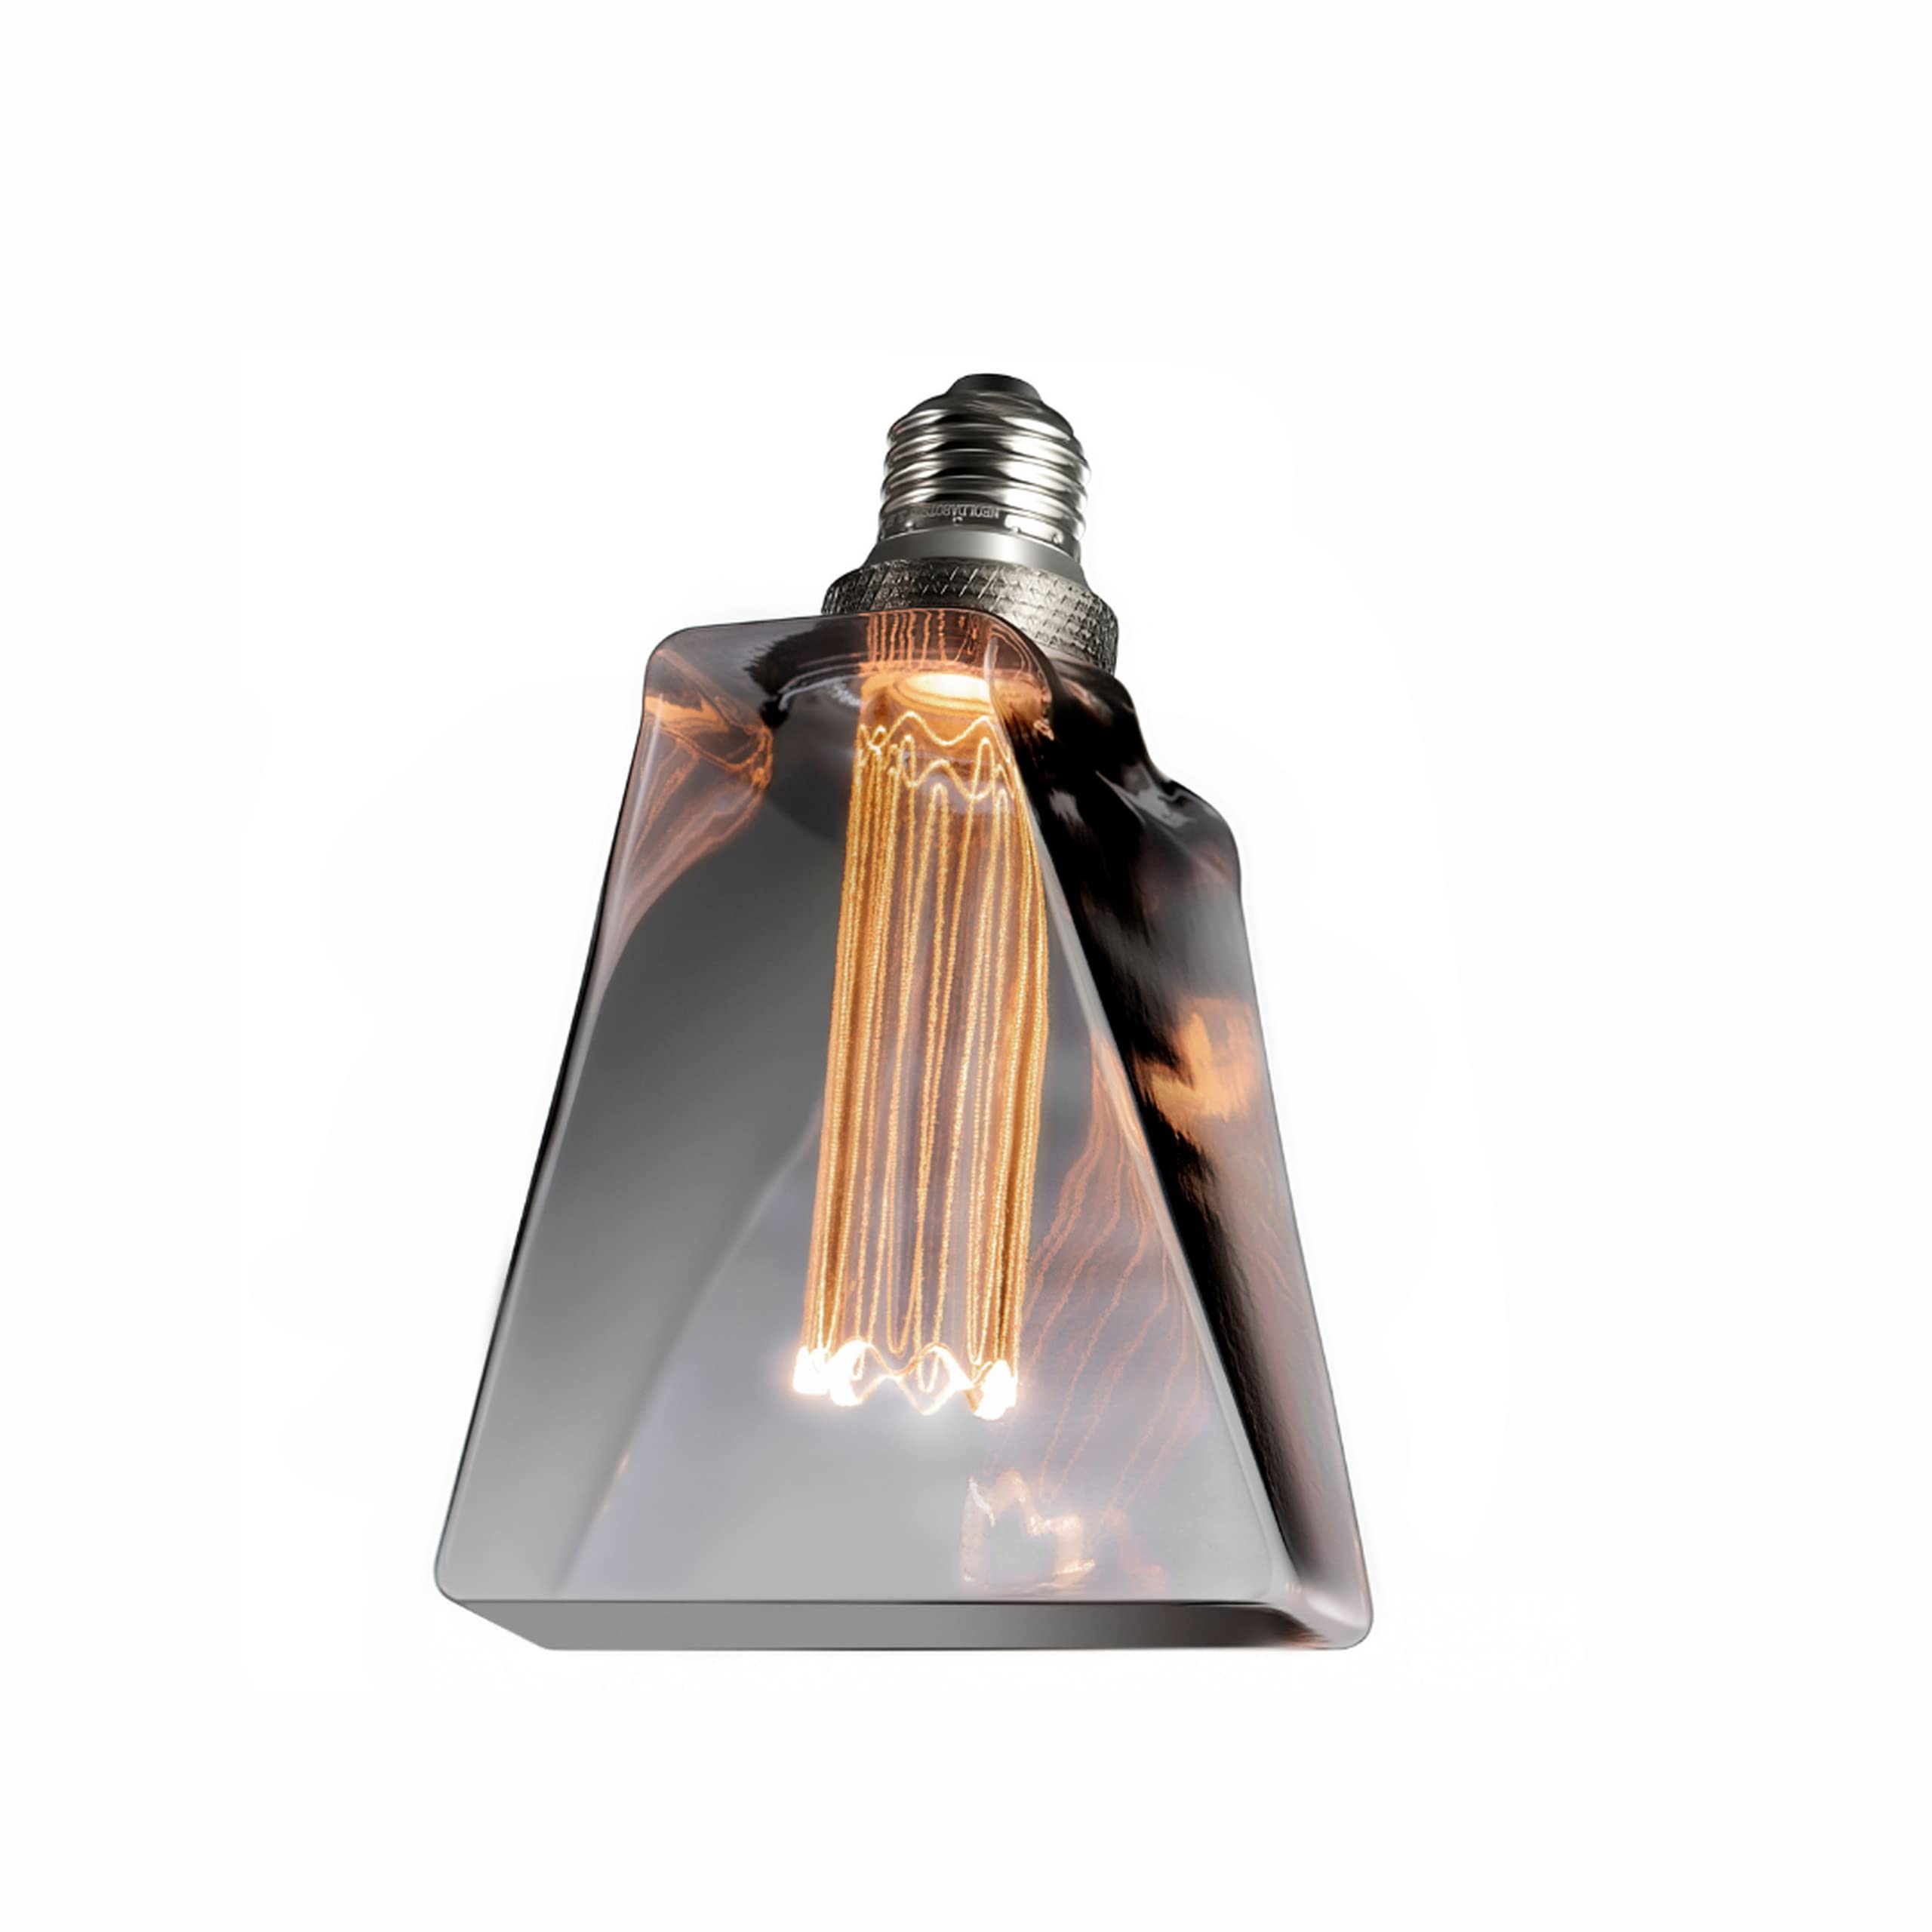 Next Glow Decorative Light Bulb Eq 20W ICE Style Shaped E26 Led Bulb Medium Base, Dimmable, Smoke/Grey Warm Light Bulb 55 Lumen,